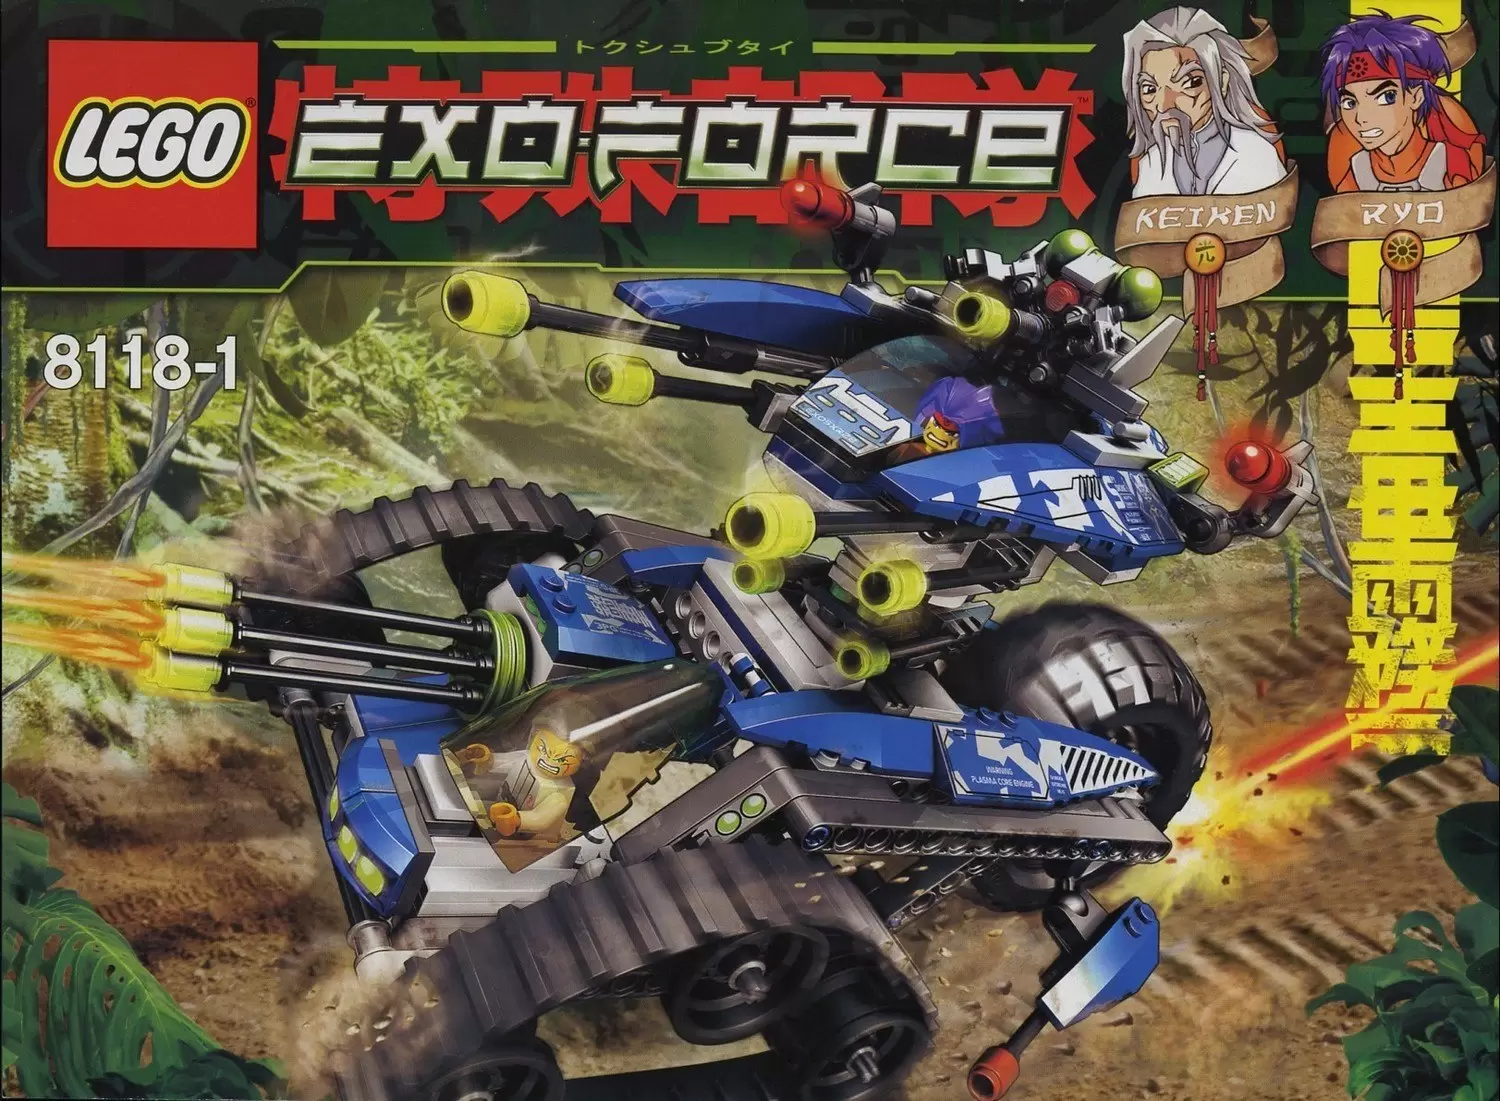 LEGO Exo-force - Hybrid Rescue Tank